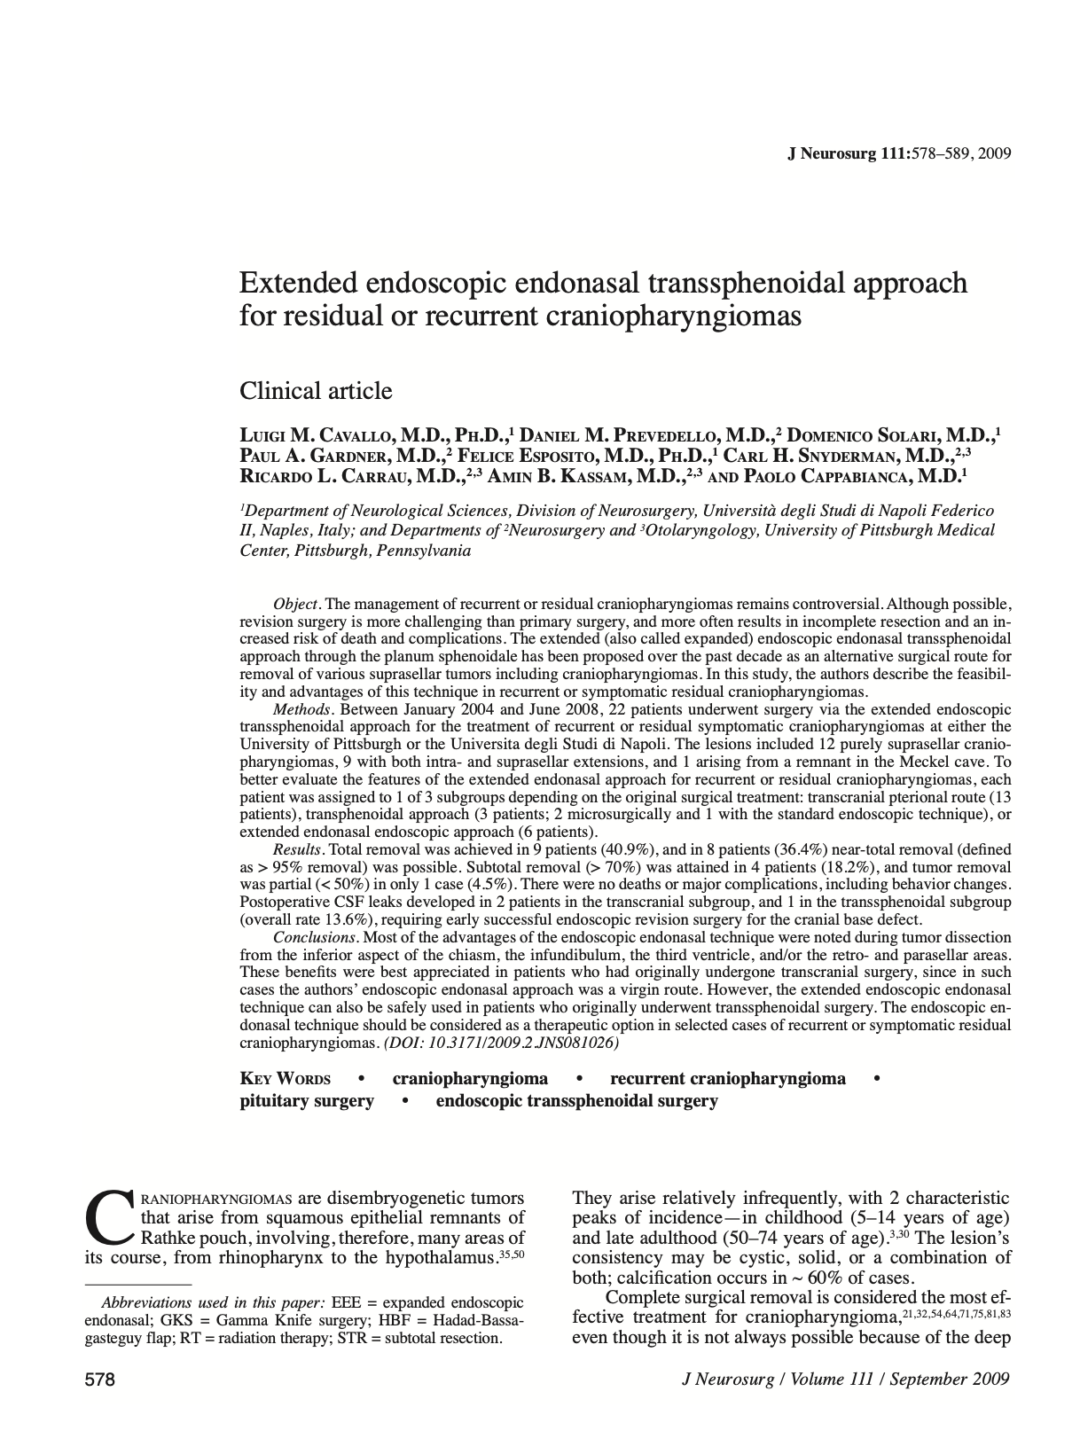 Extended endoscopic endonasal transsphenoidal approach for residual or recurrent craniopharyngiomas